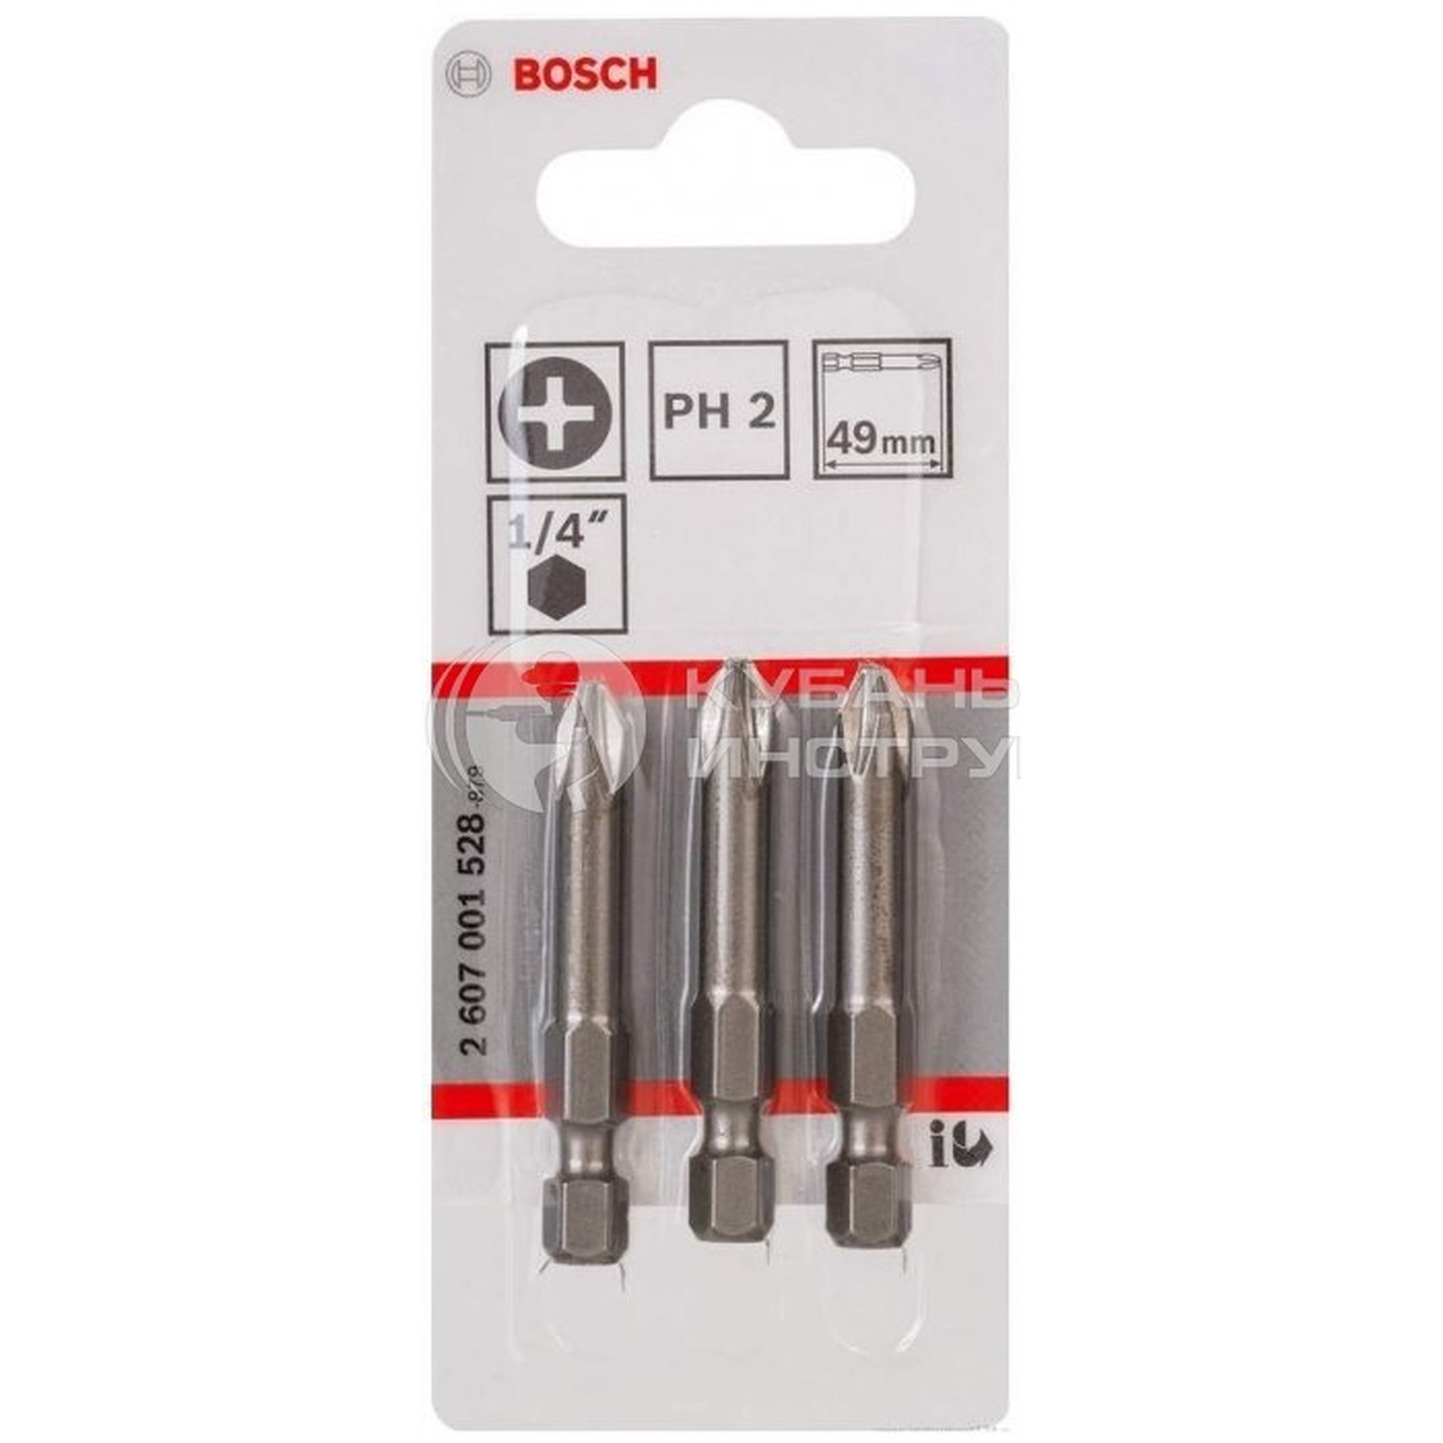 Бита Bosch 49мм PH2 XH 3шт 2607001528 набор бит bosch extra hart ph2 xh 25мм 3шт